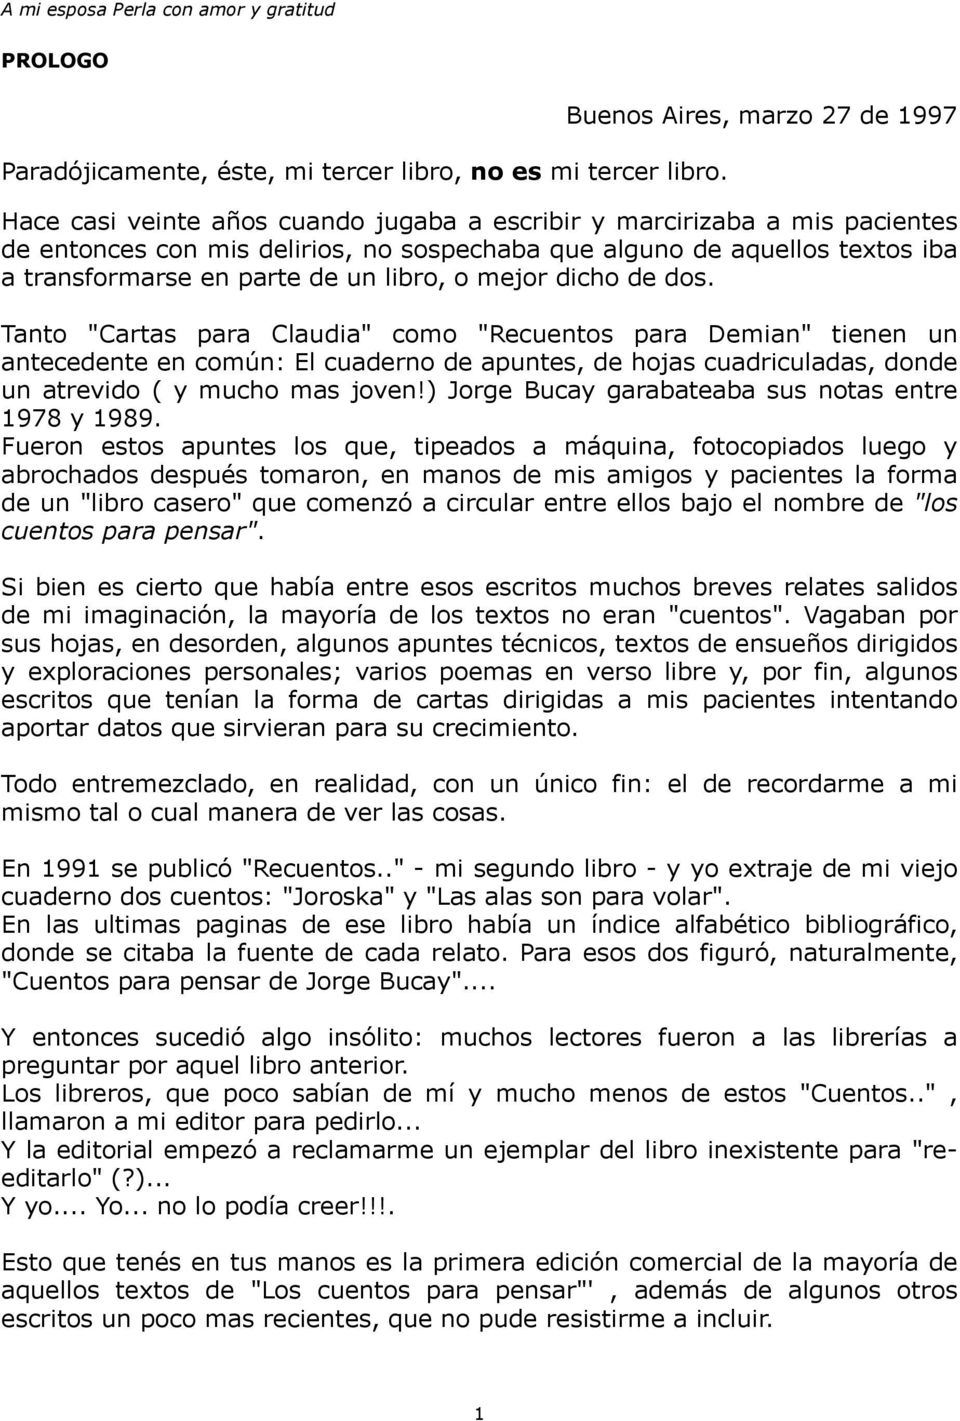 CUENTOS PARA PENSAR. Jorge Bucay - PDF Free Download